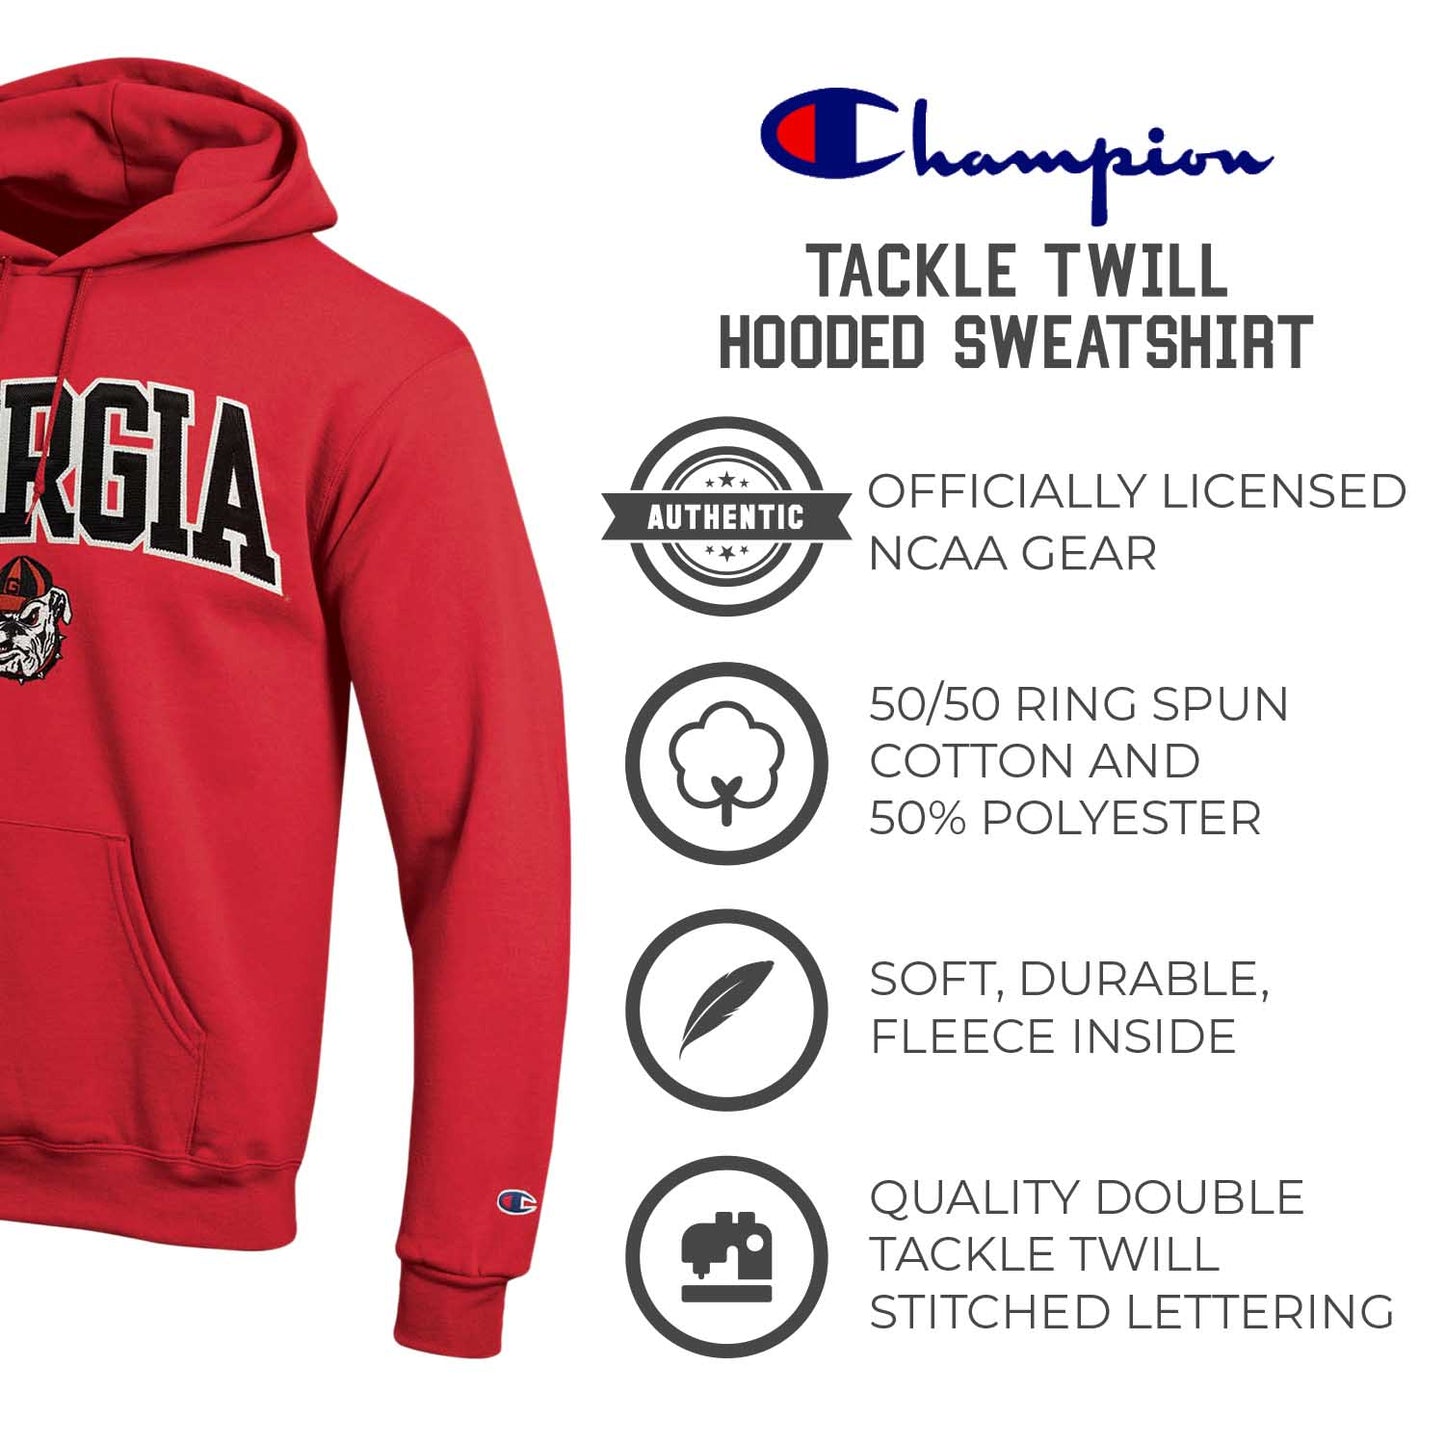 Georgia Bulldogs Champion Adult Tackle Twill Hooded Sweatshirt - Red